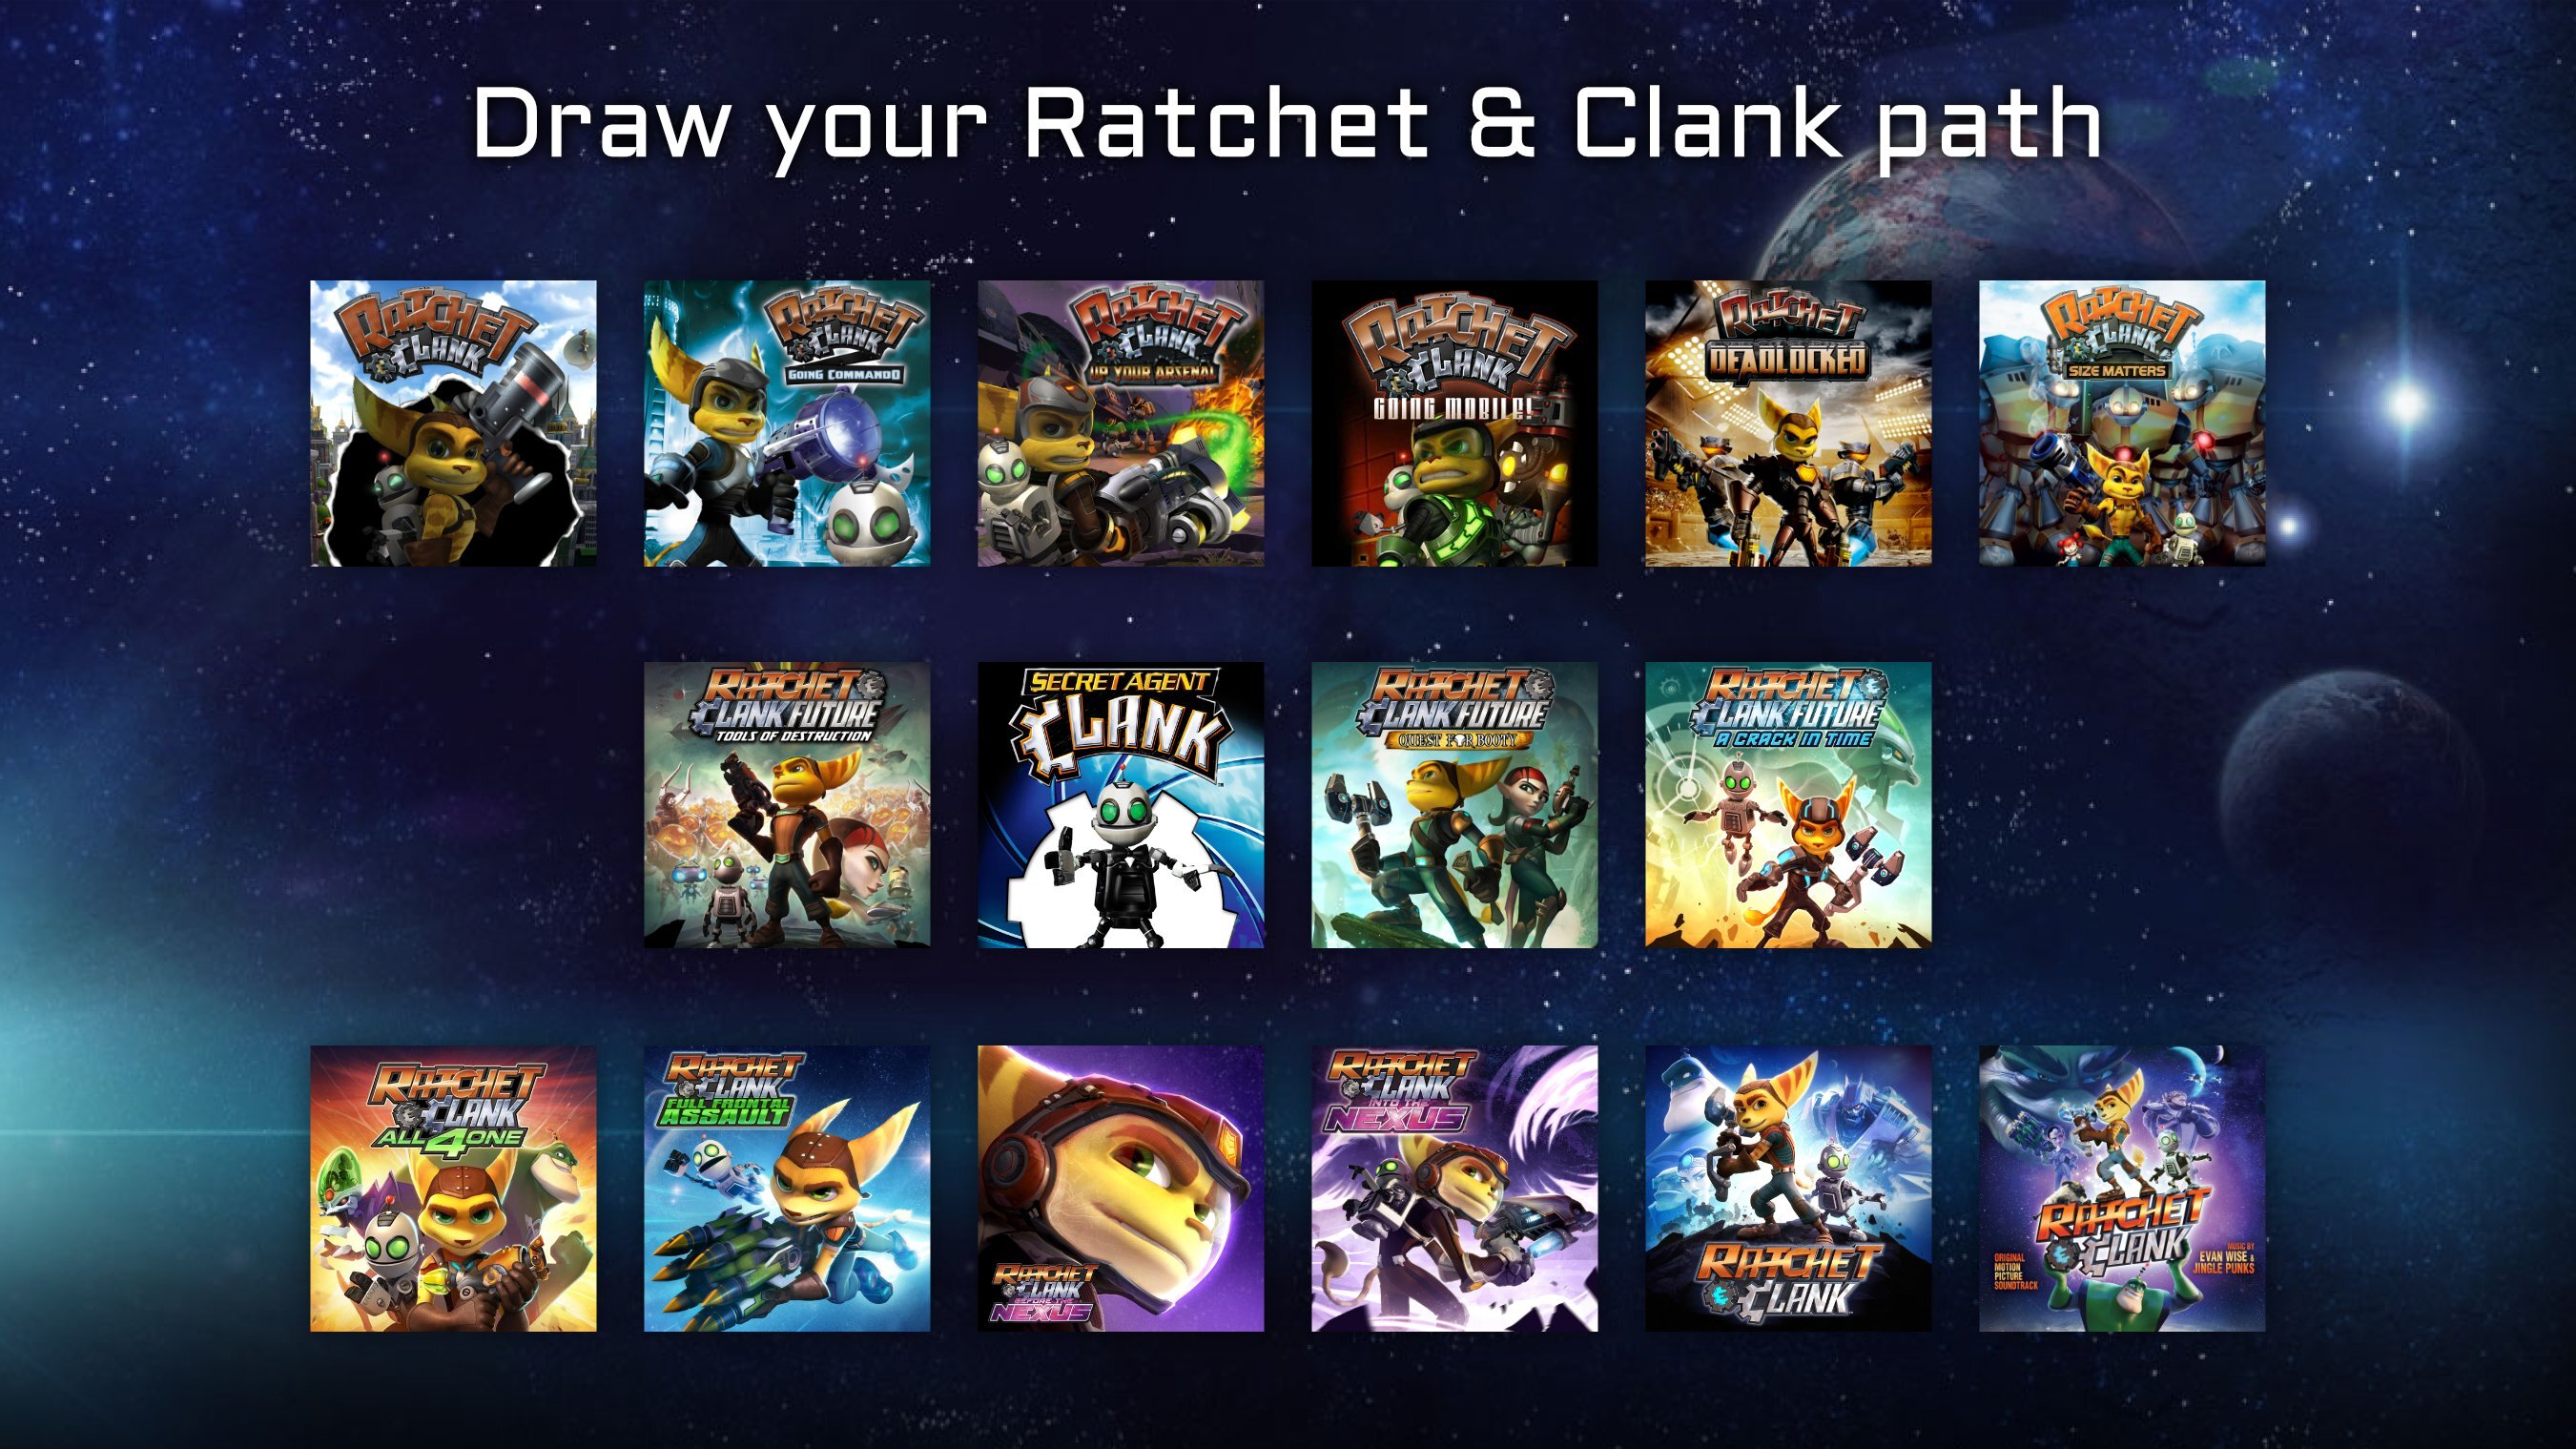 Ratchet & Clank: Rift Apart arrives on PS5 June 11 – PlayStation.Blog